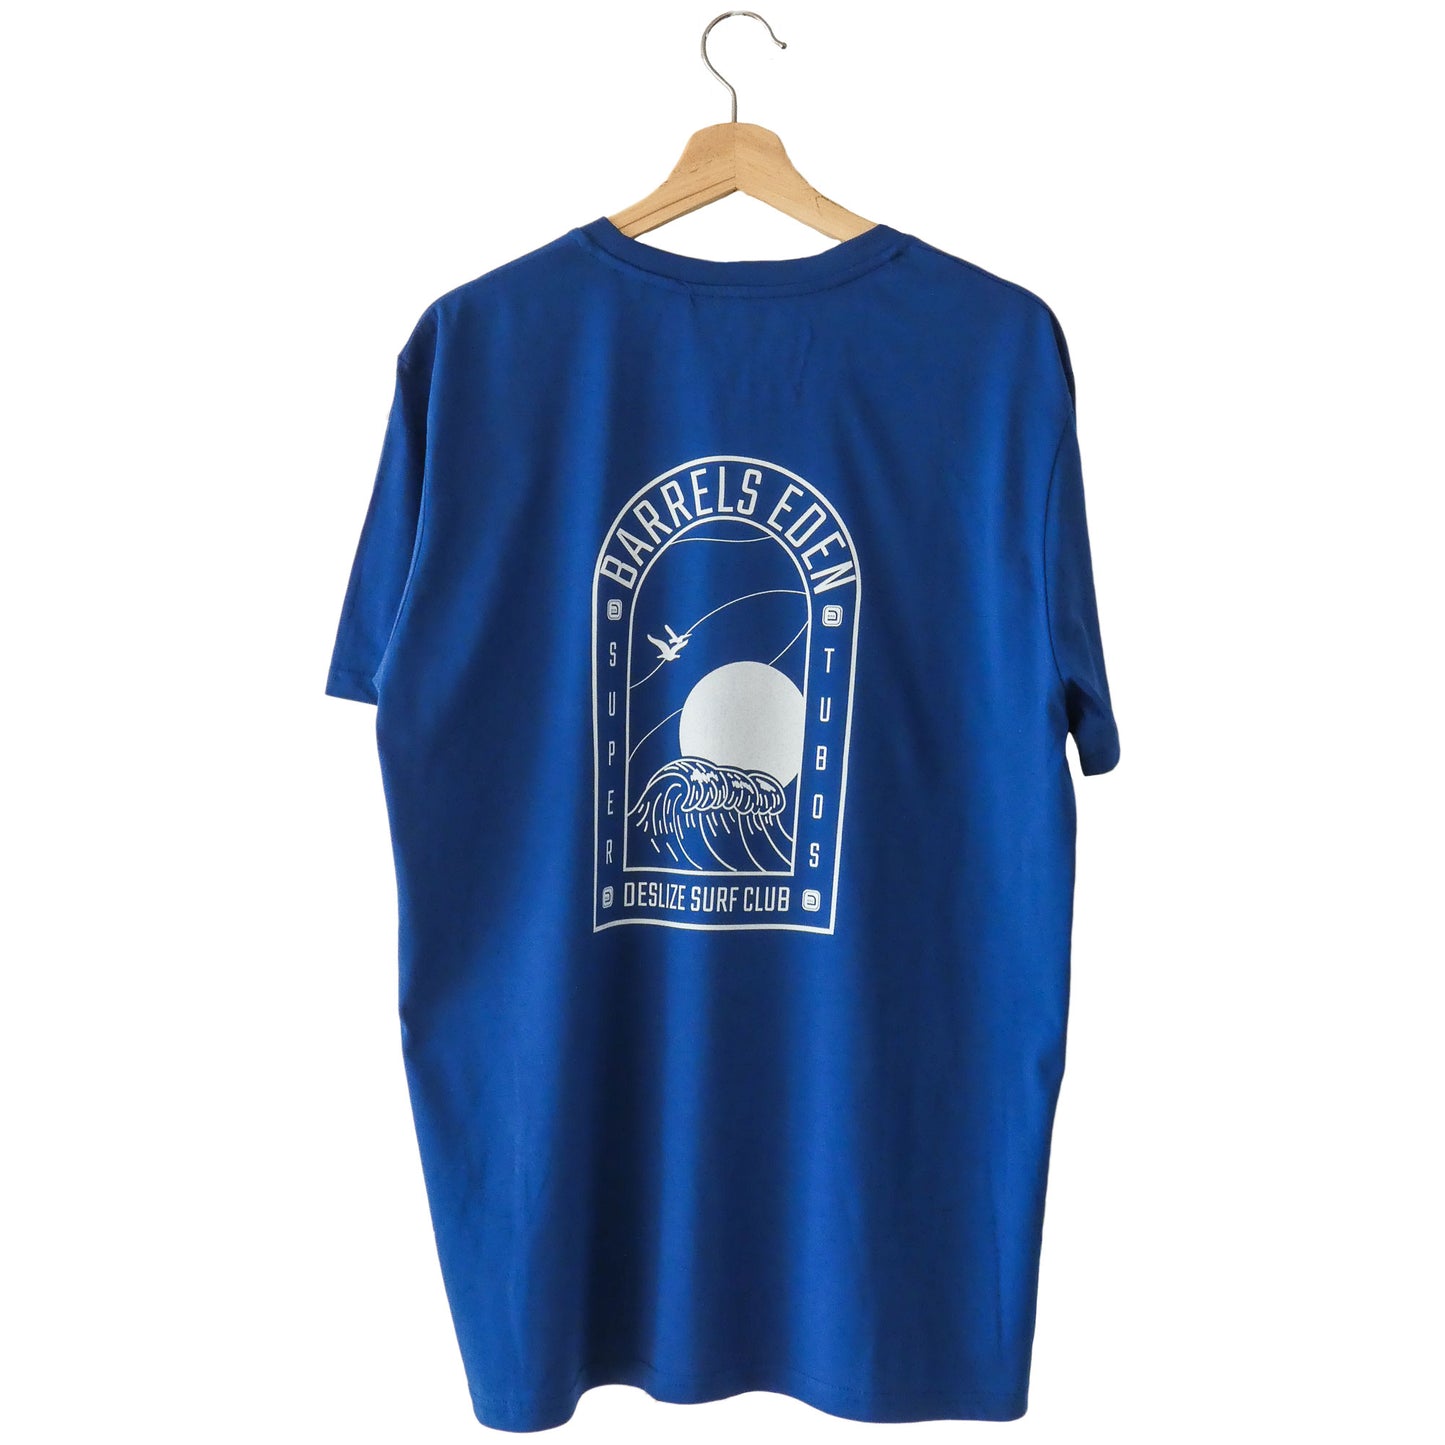 Supertubos blue tshirt, back side